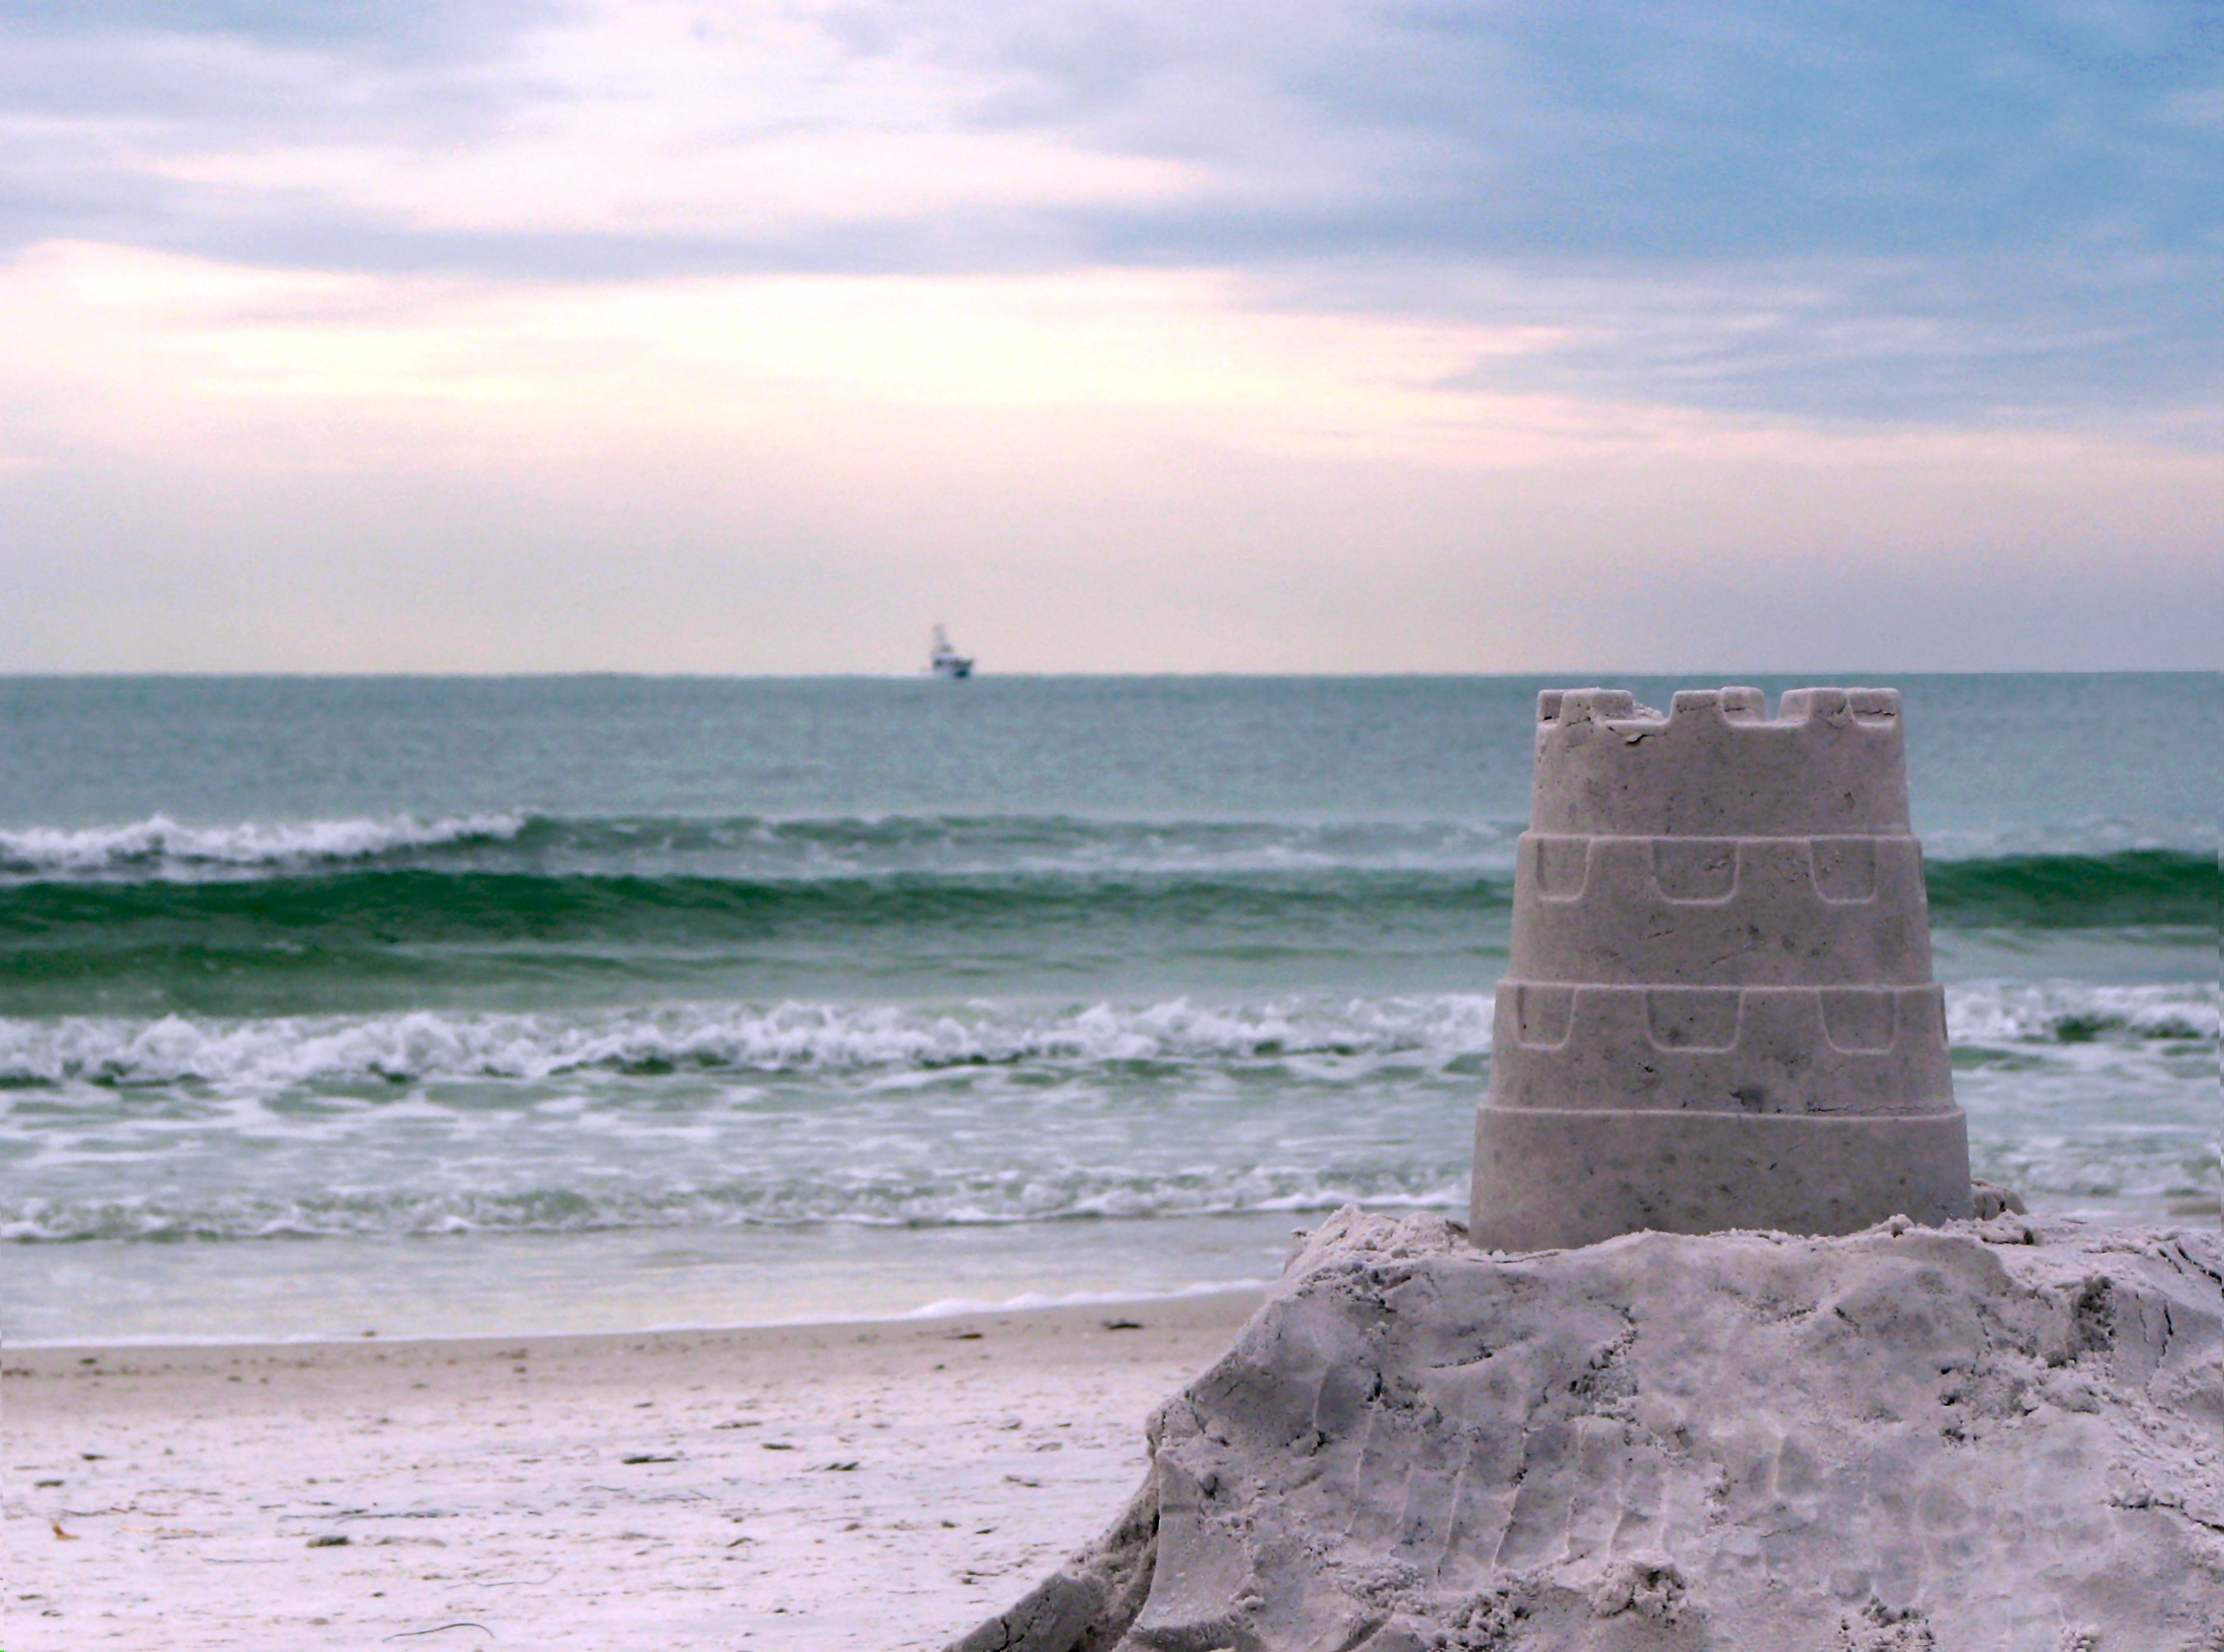 A sandcastle overlooking the ocean photo